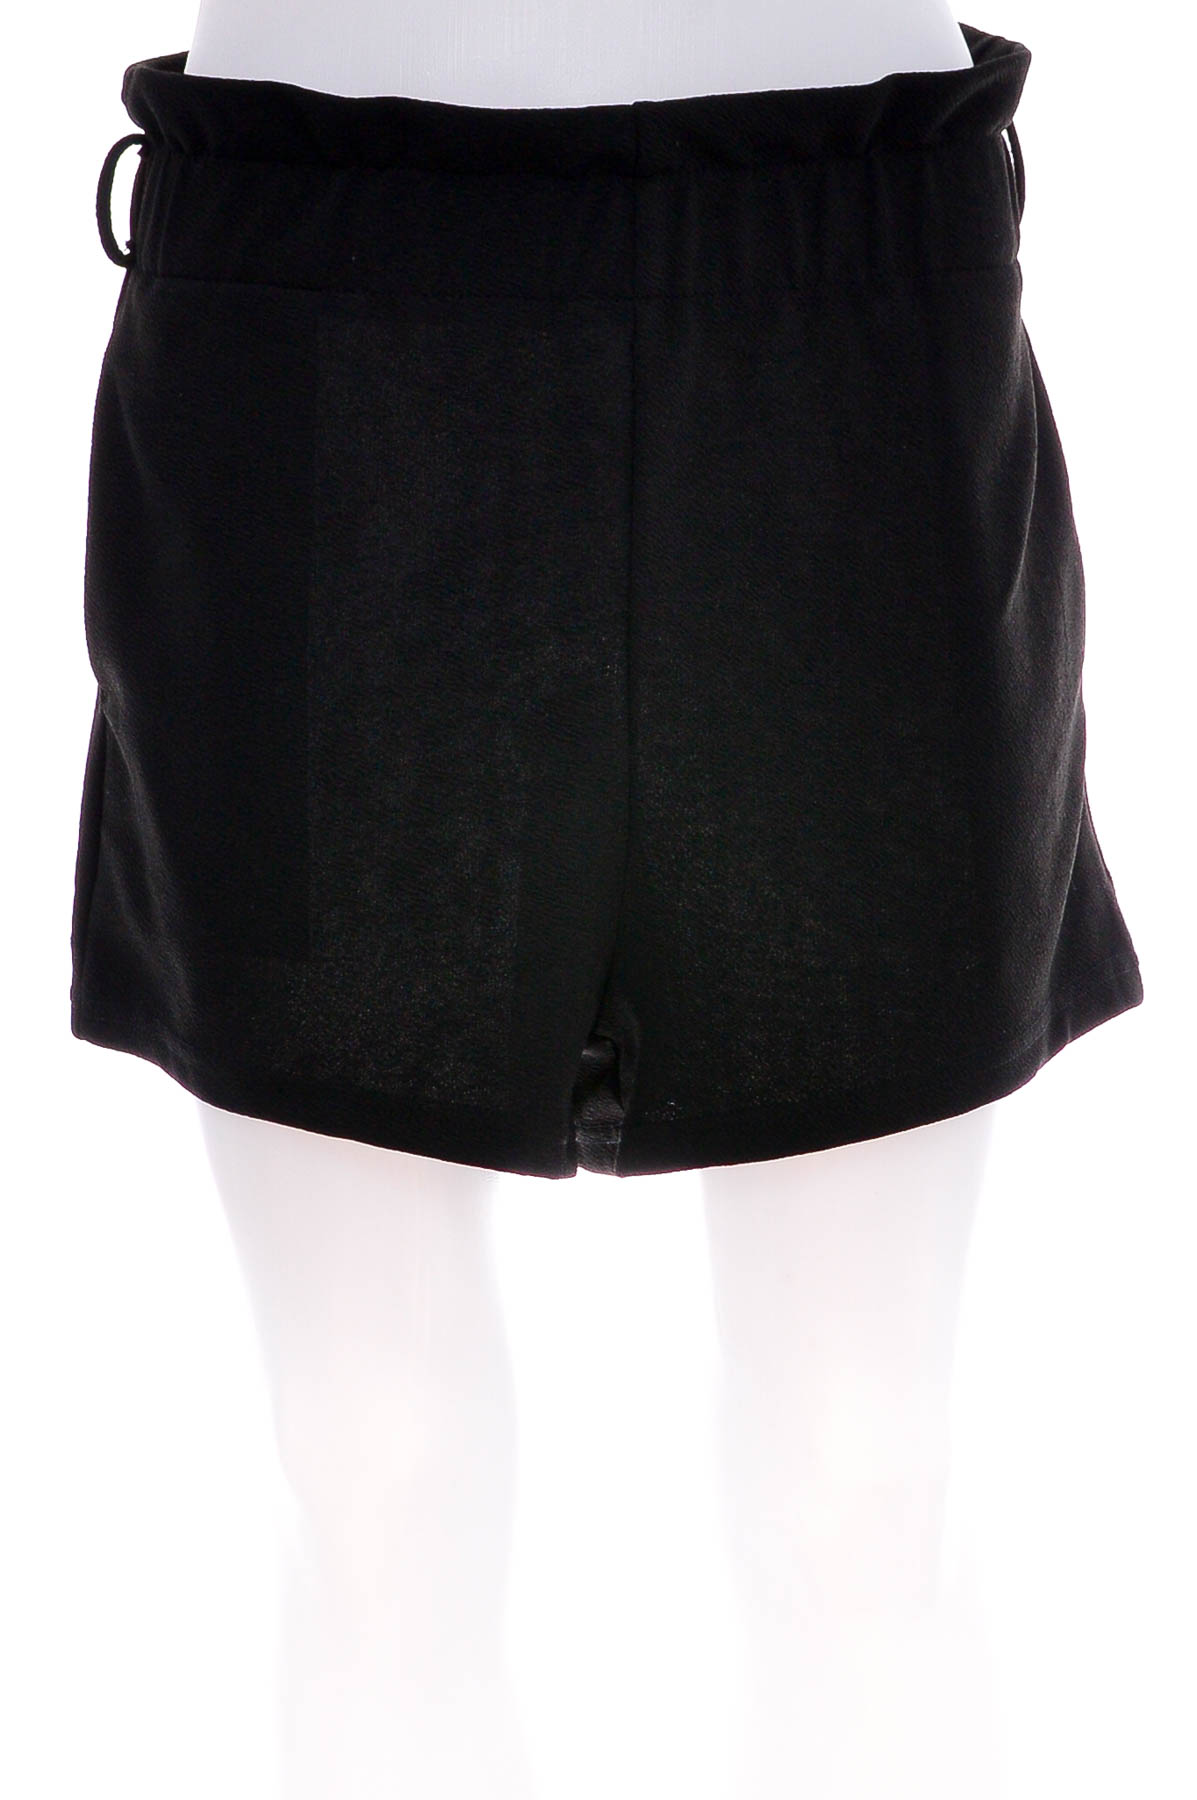 Female shorts - SHEIN - 0